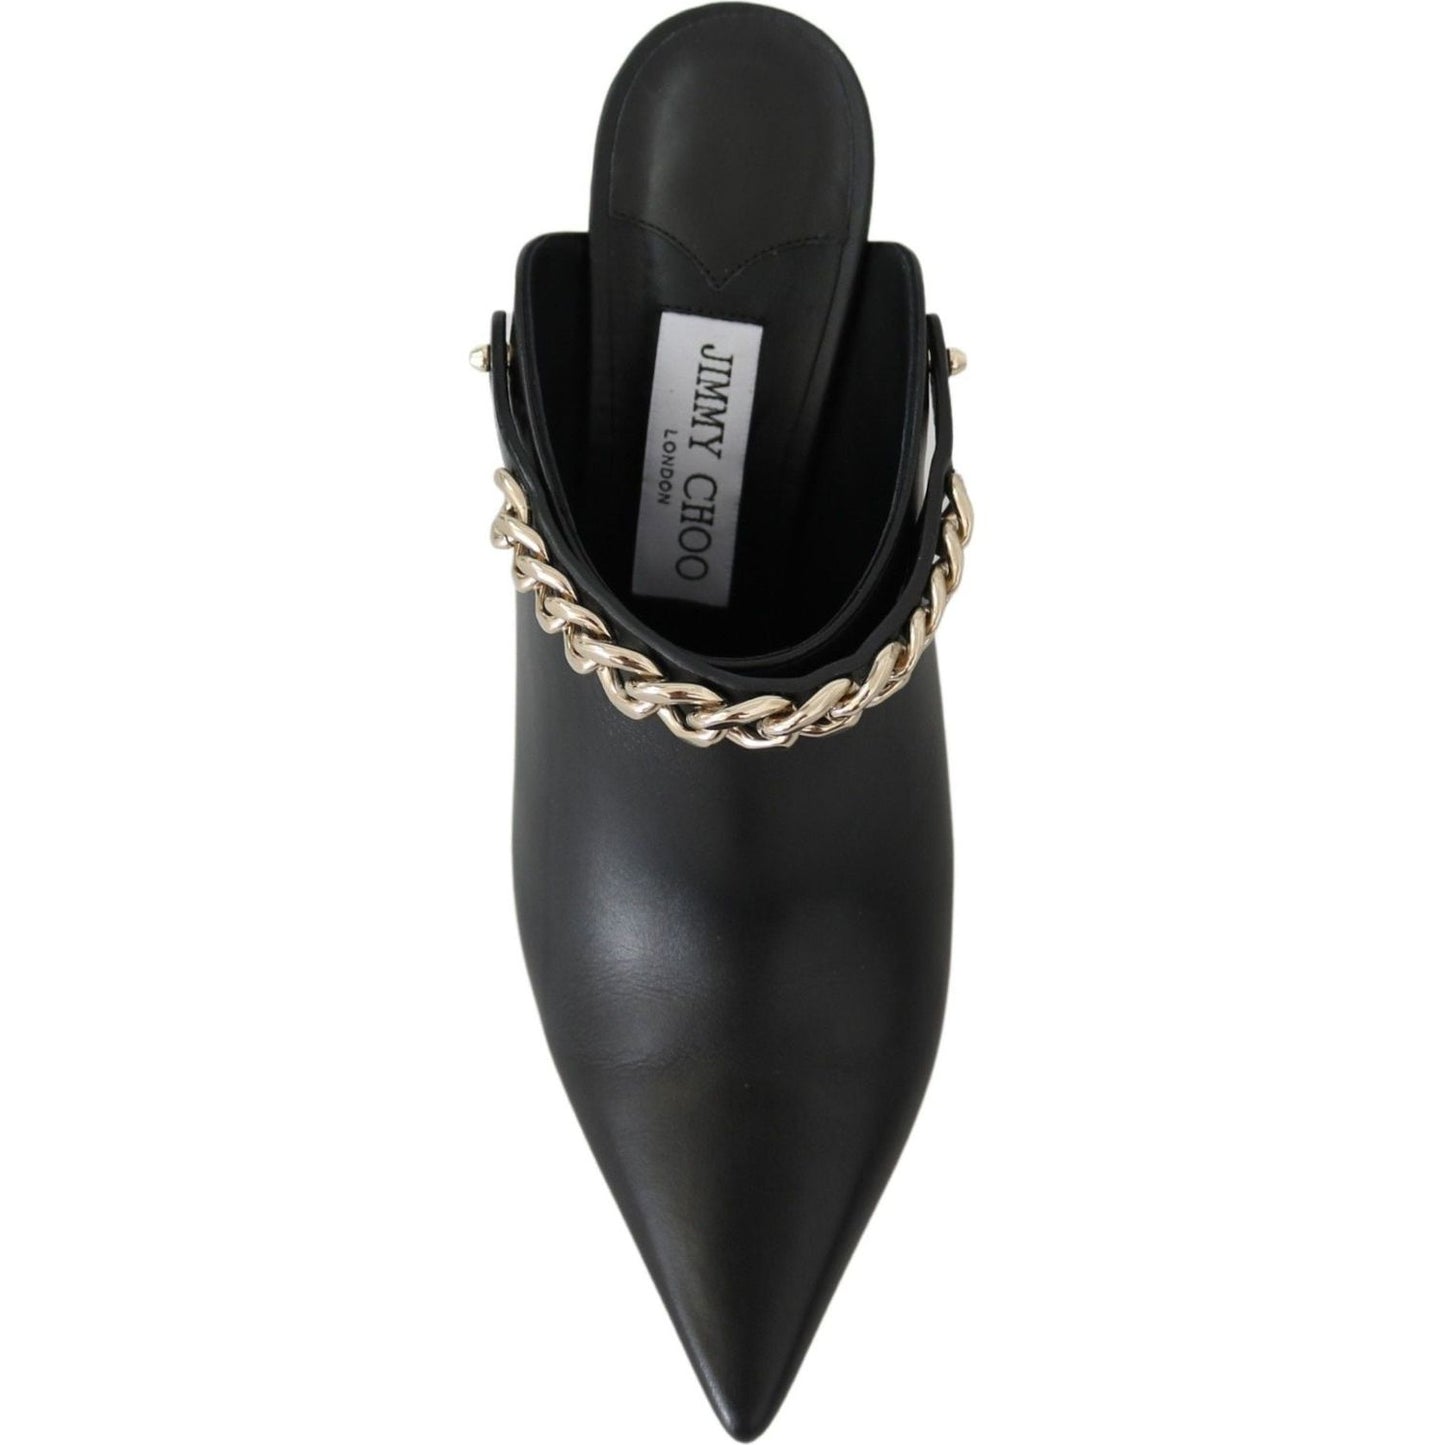 Jimmy Choo Elegant Black Gold Leather Pumps black-calf-leather-lexx-pumps-shoes